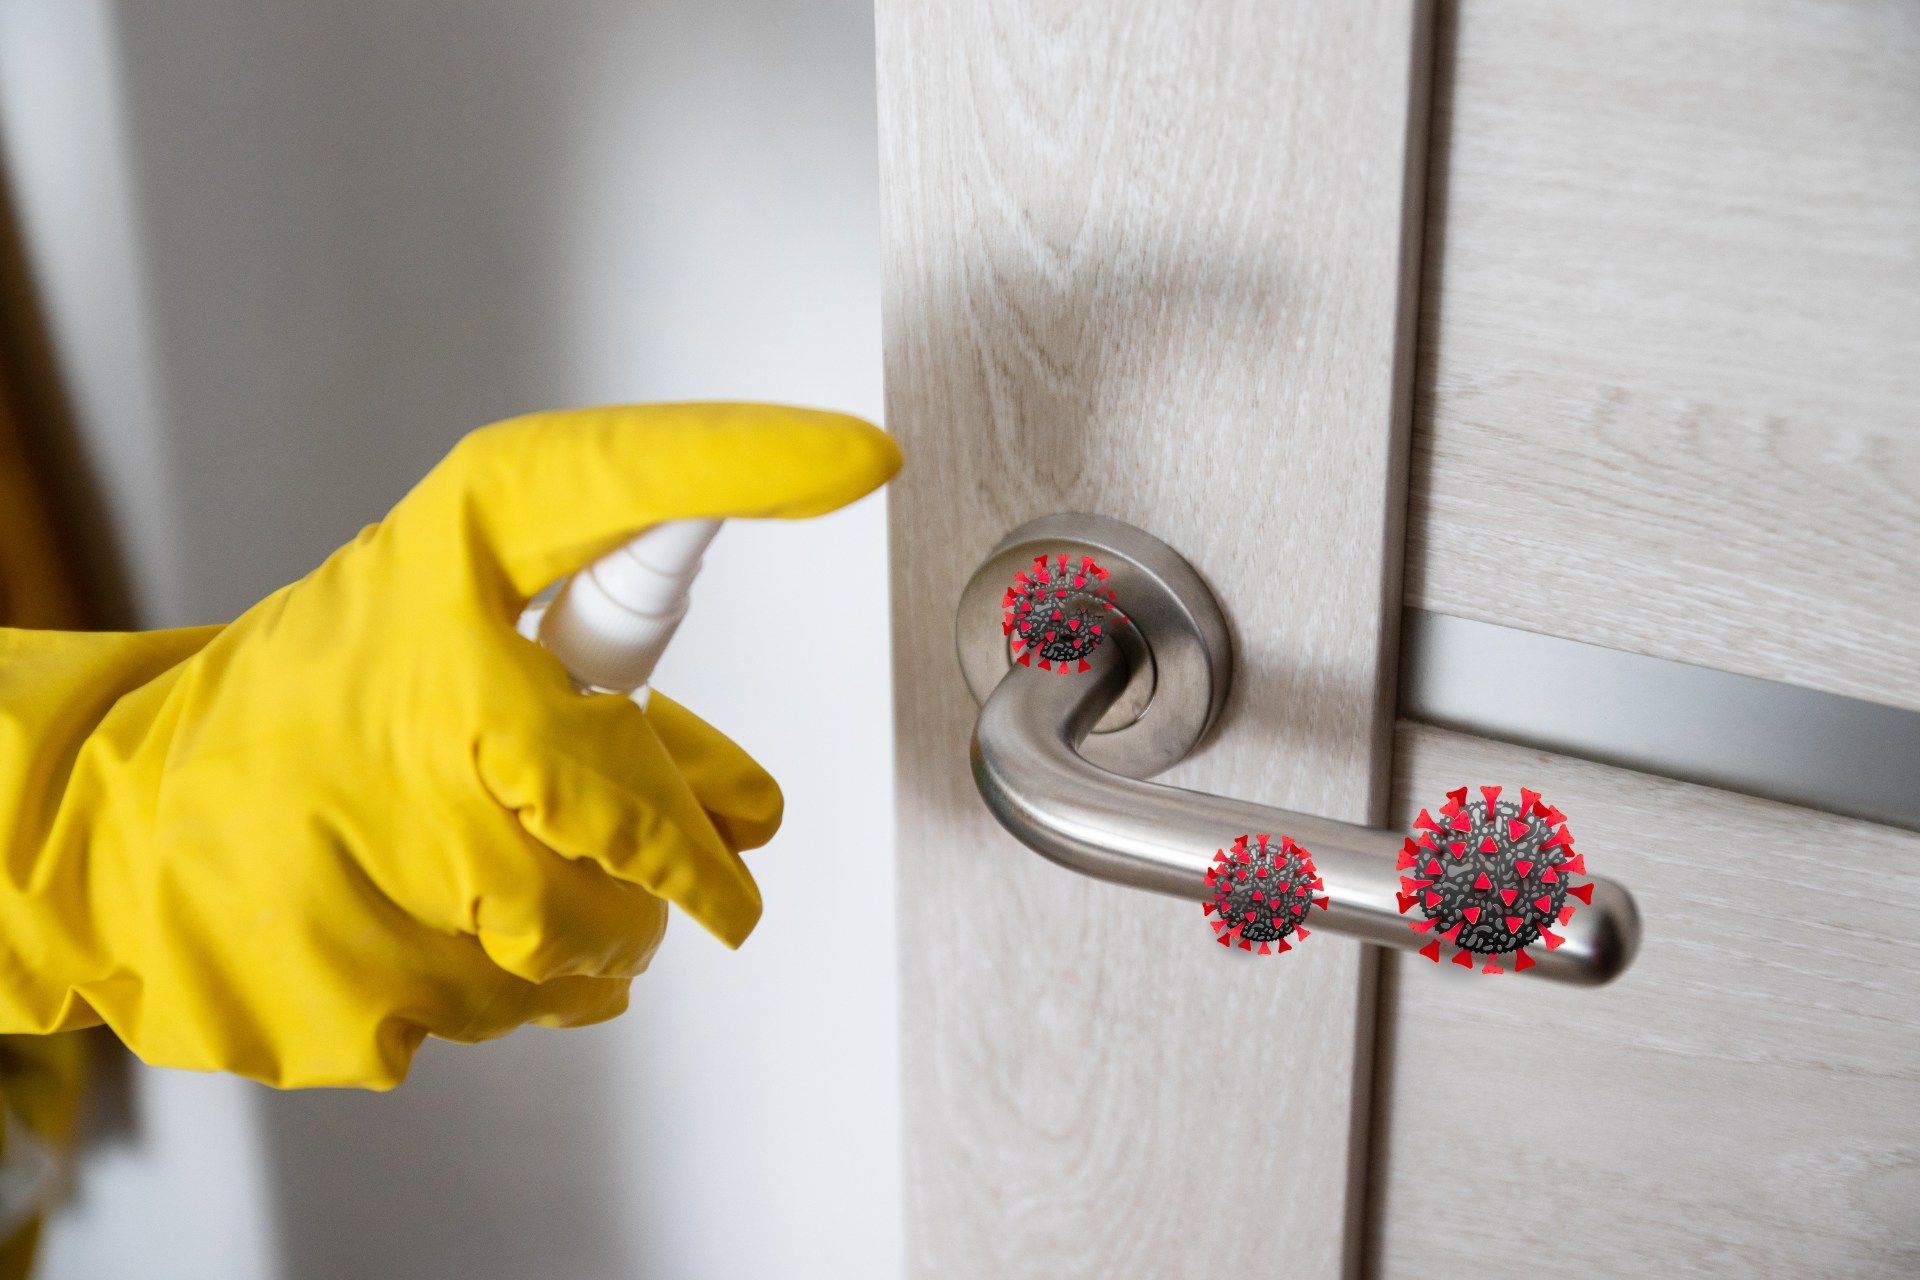 Hand in yellow glove sprays disinfectant on COVID-19-infected door handle